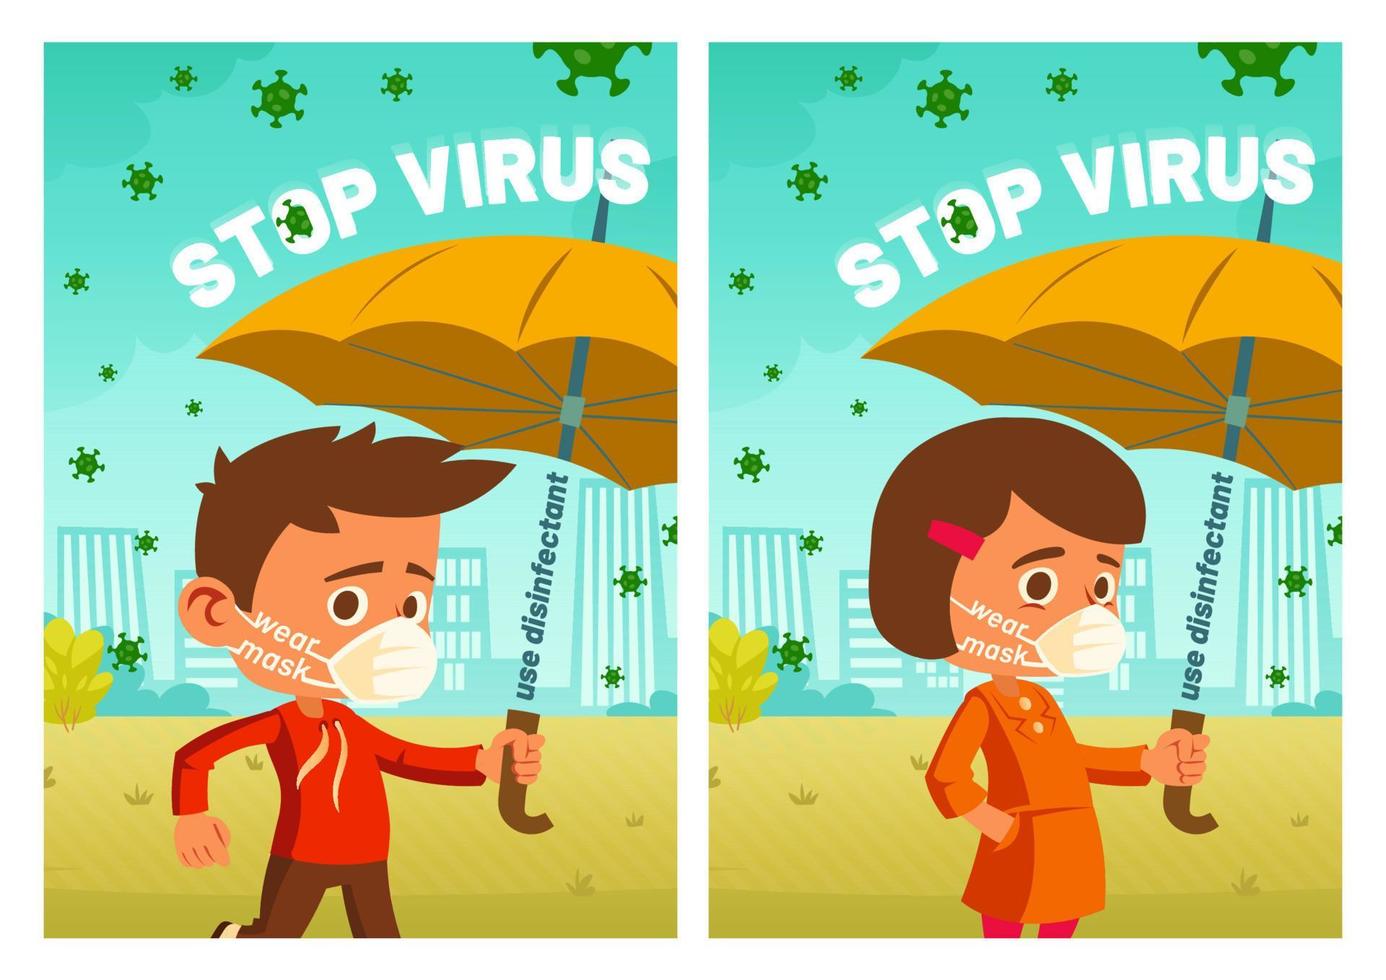 Stop virus cartoon posters, little boy and girl vector